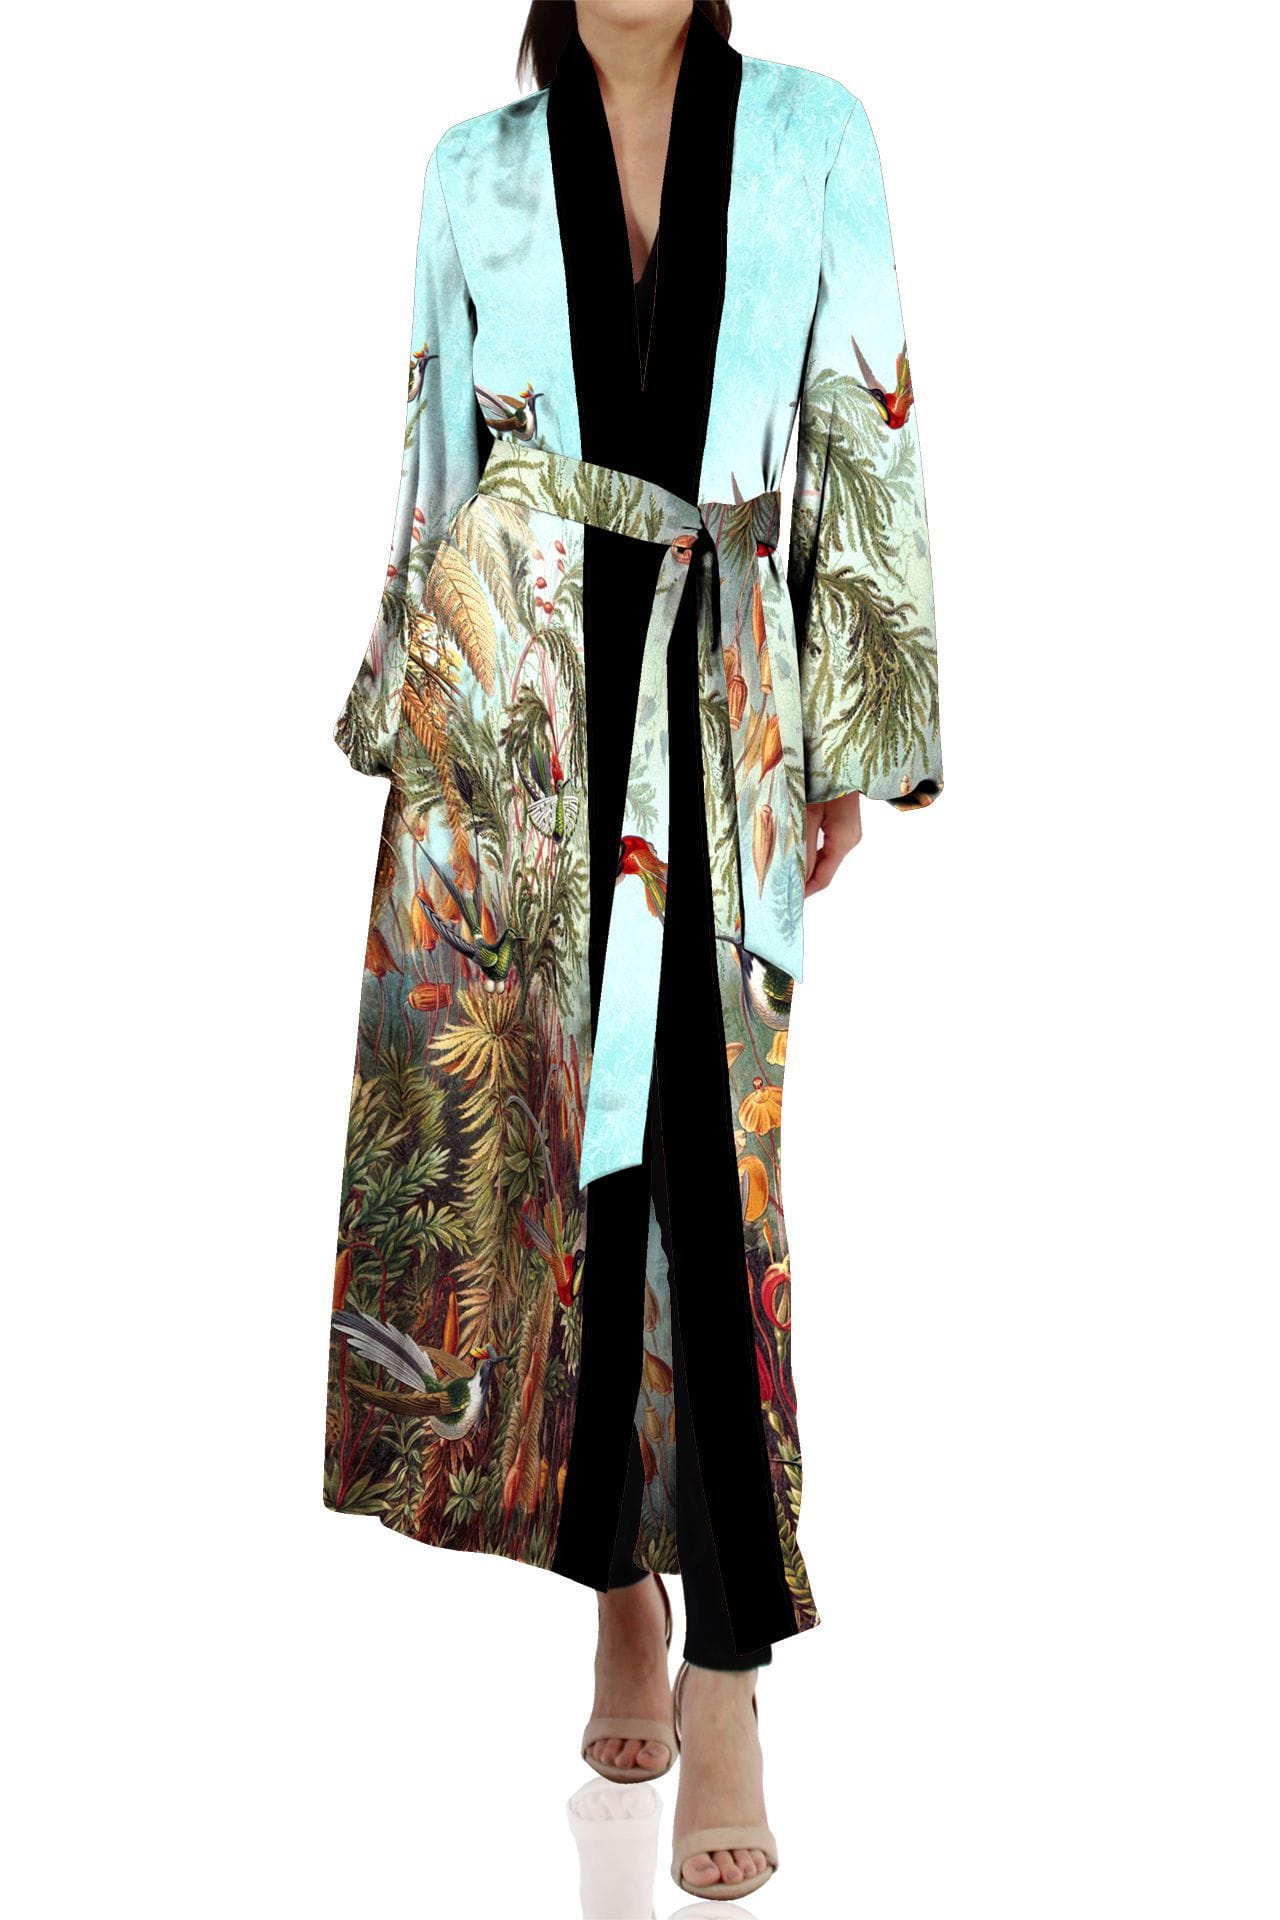 "Kyle X Shahida" "womens long kimono robe" "silk robes and kimonos" "long kimono robe womens" 